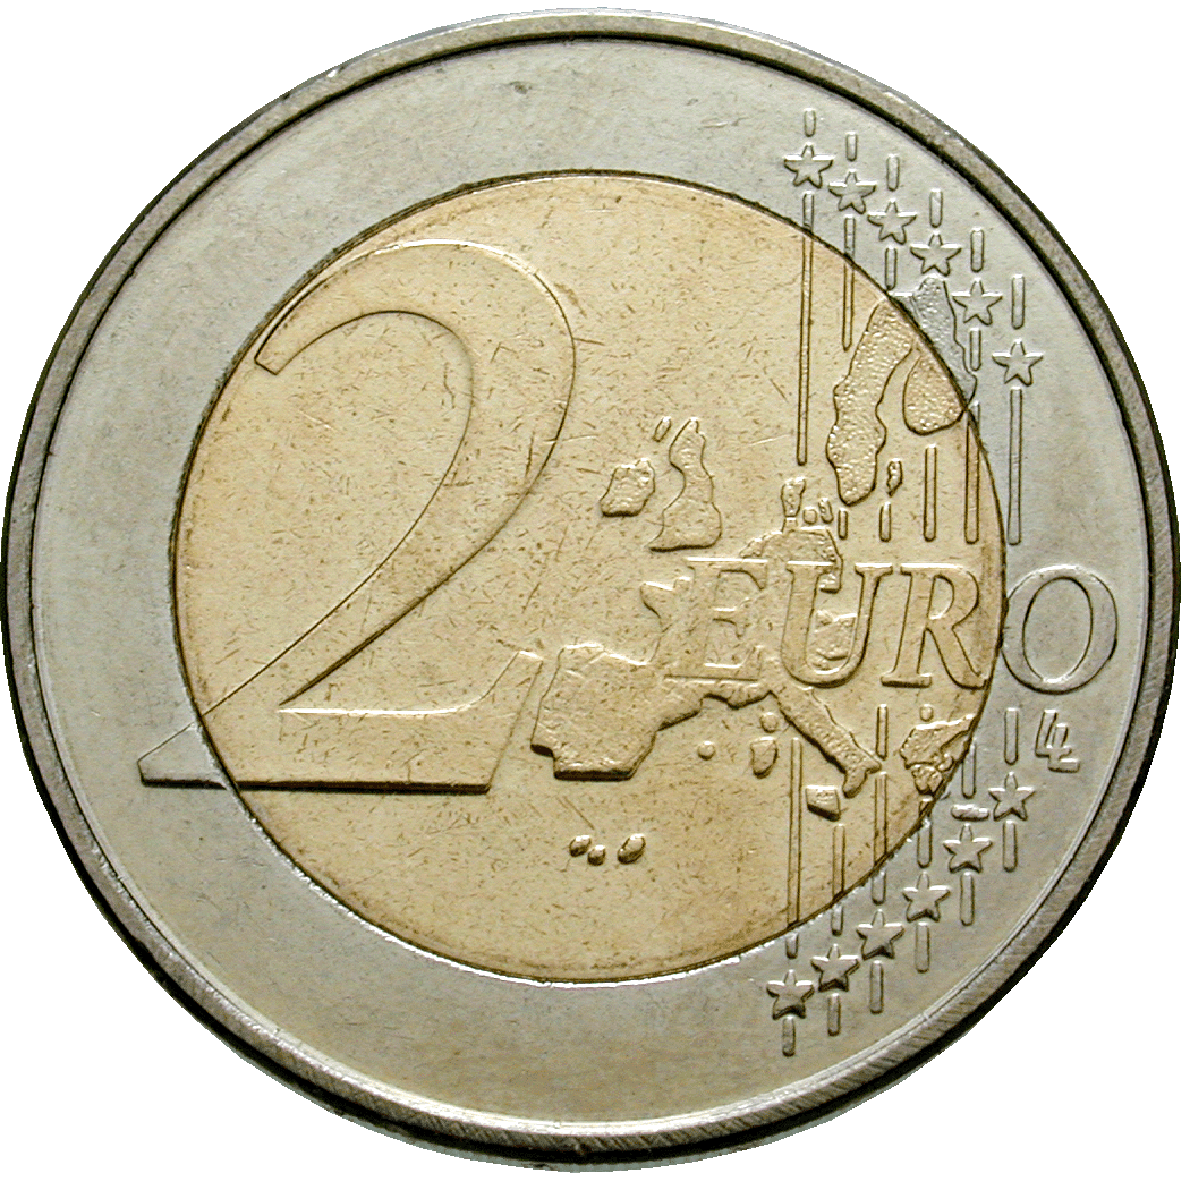 Kingdom of Belgium, Albert II, 2 Euros 2000 (obverse)